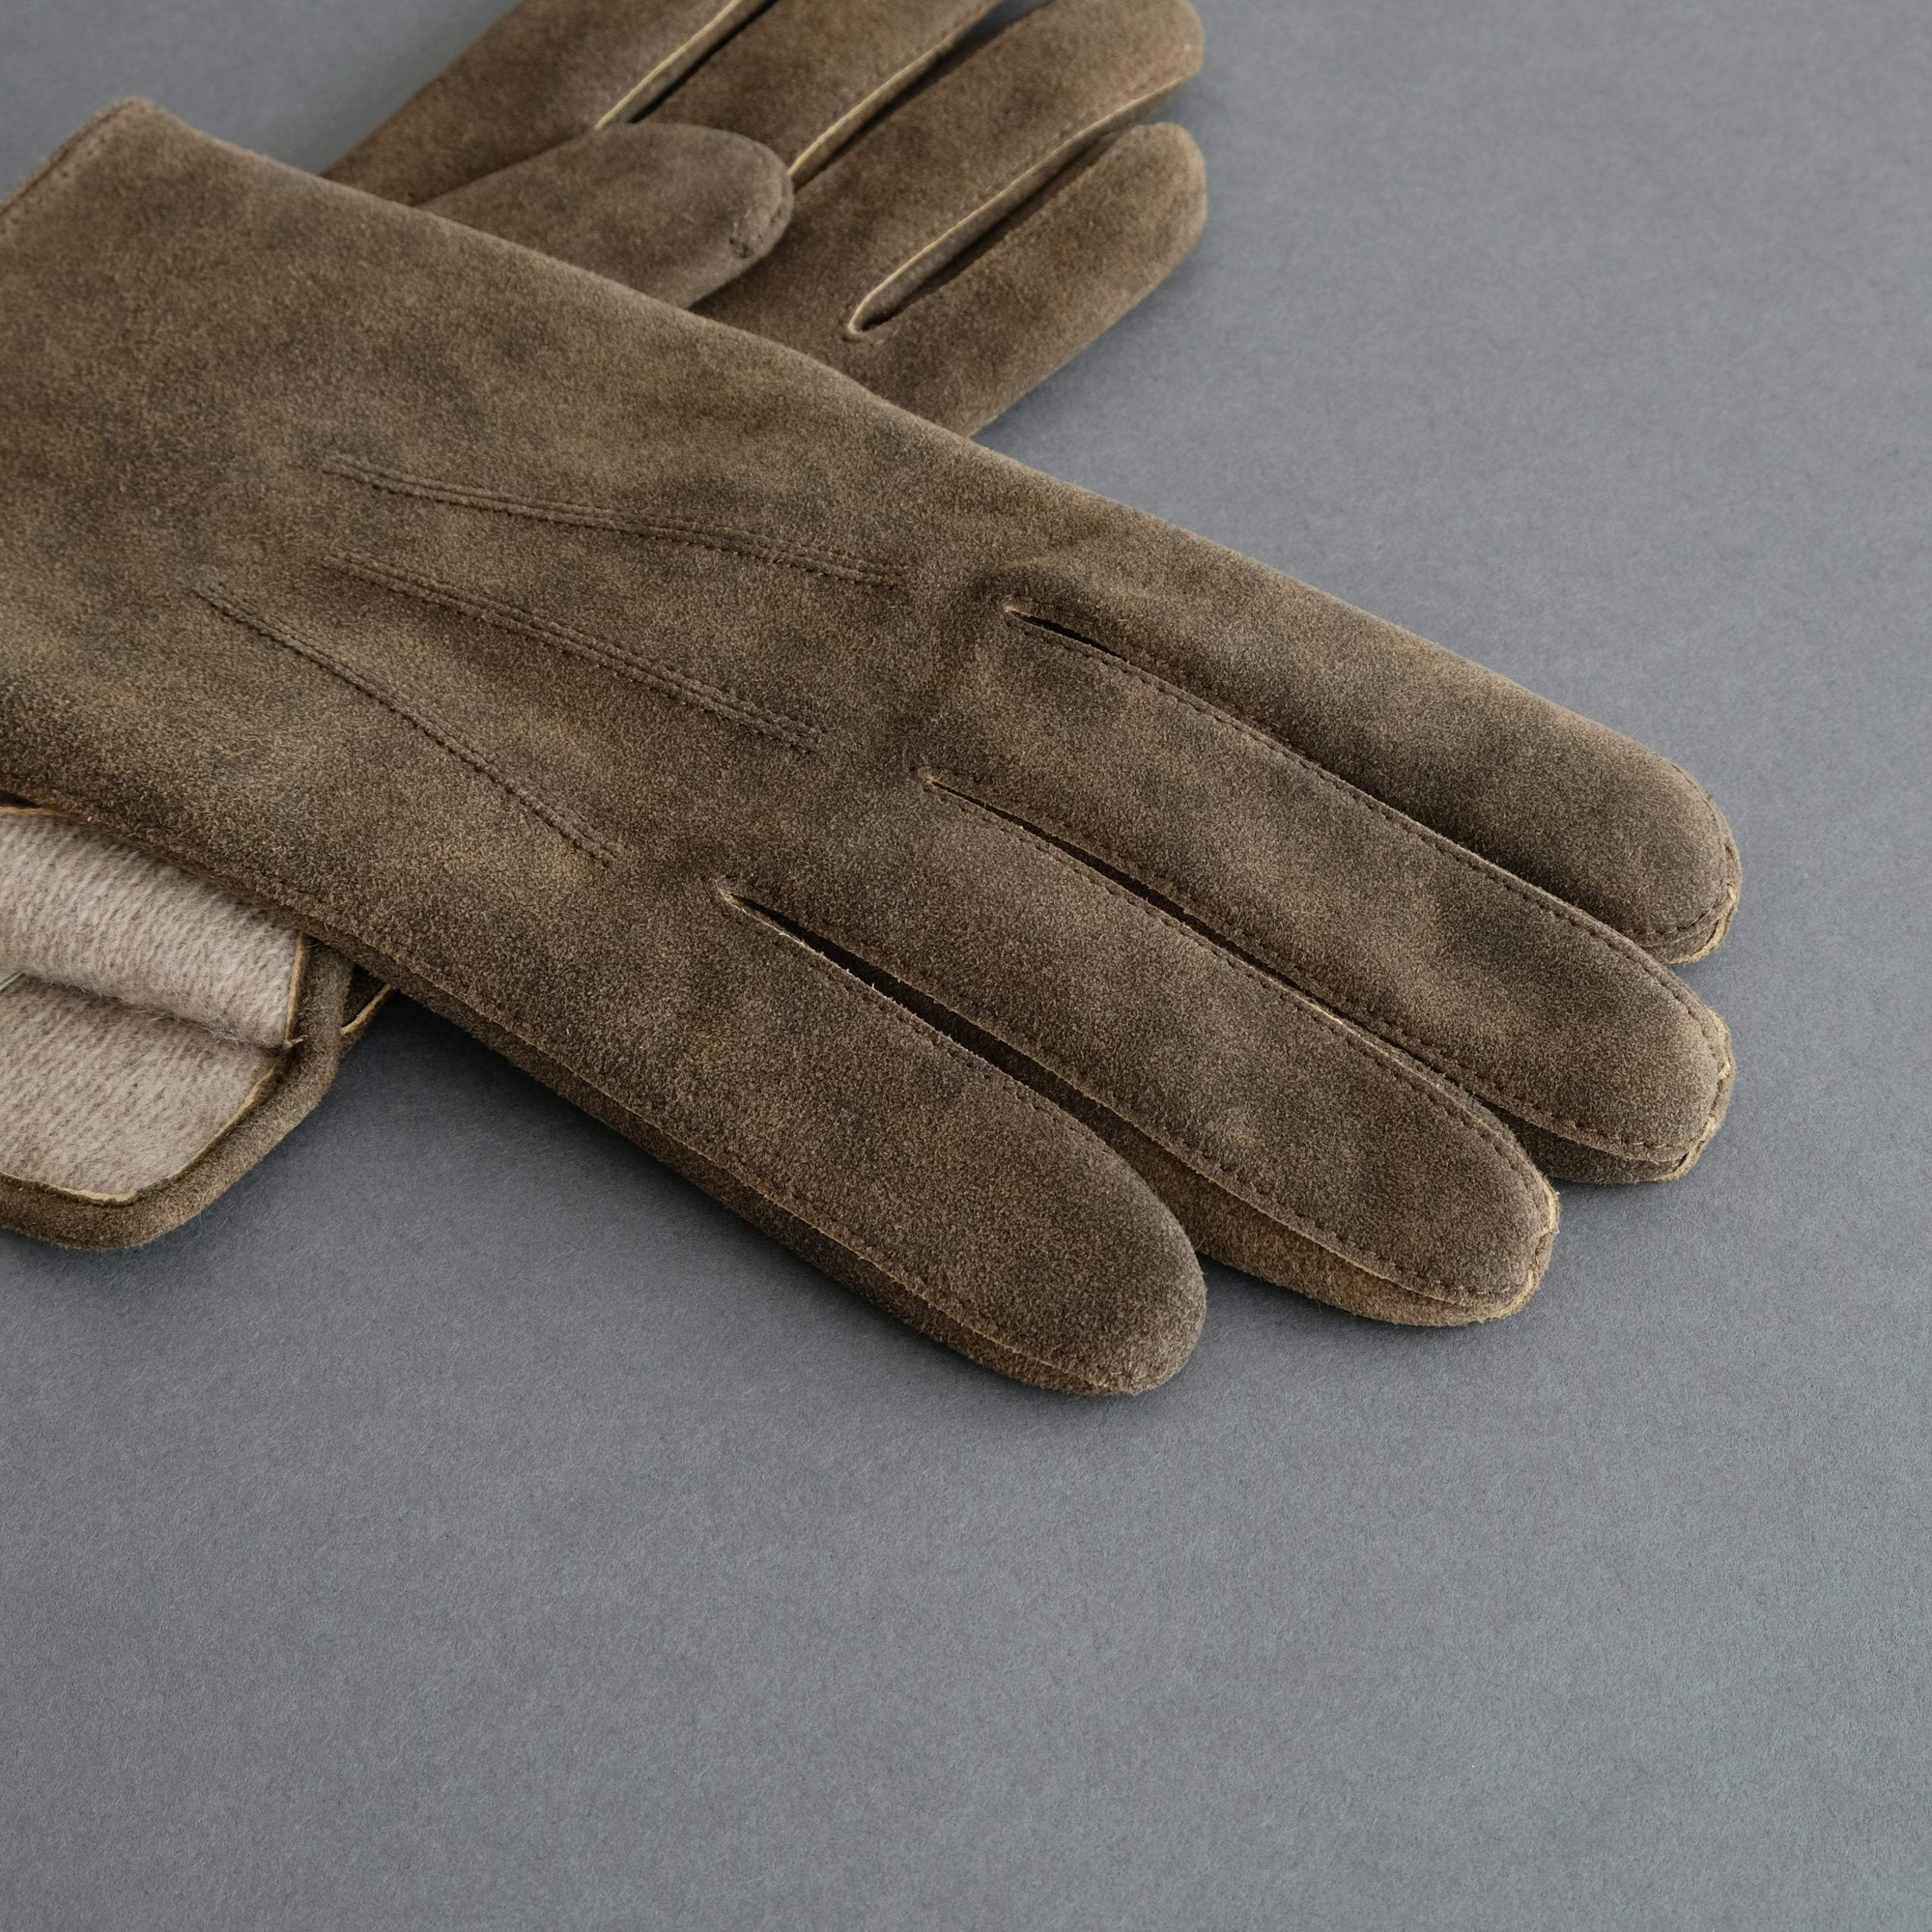 Gentlemen's Gloves from Walnut Goatskin Lined with Cashmere - TR Handschuhe Wien - Thomas Riemer Handmade Gloves